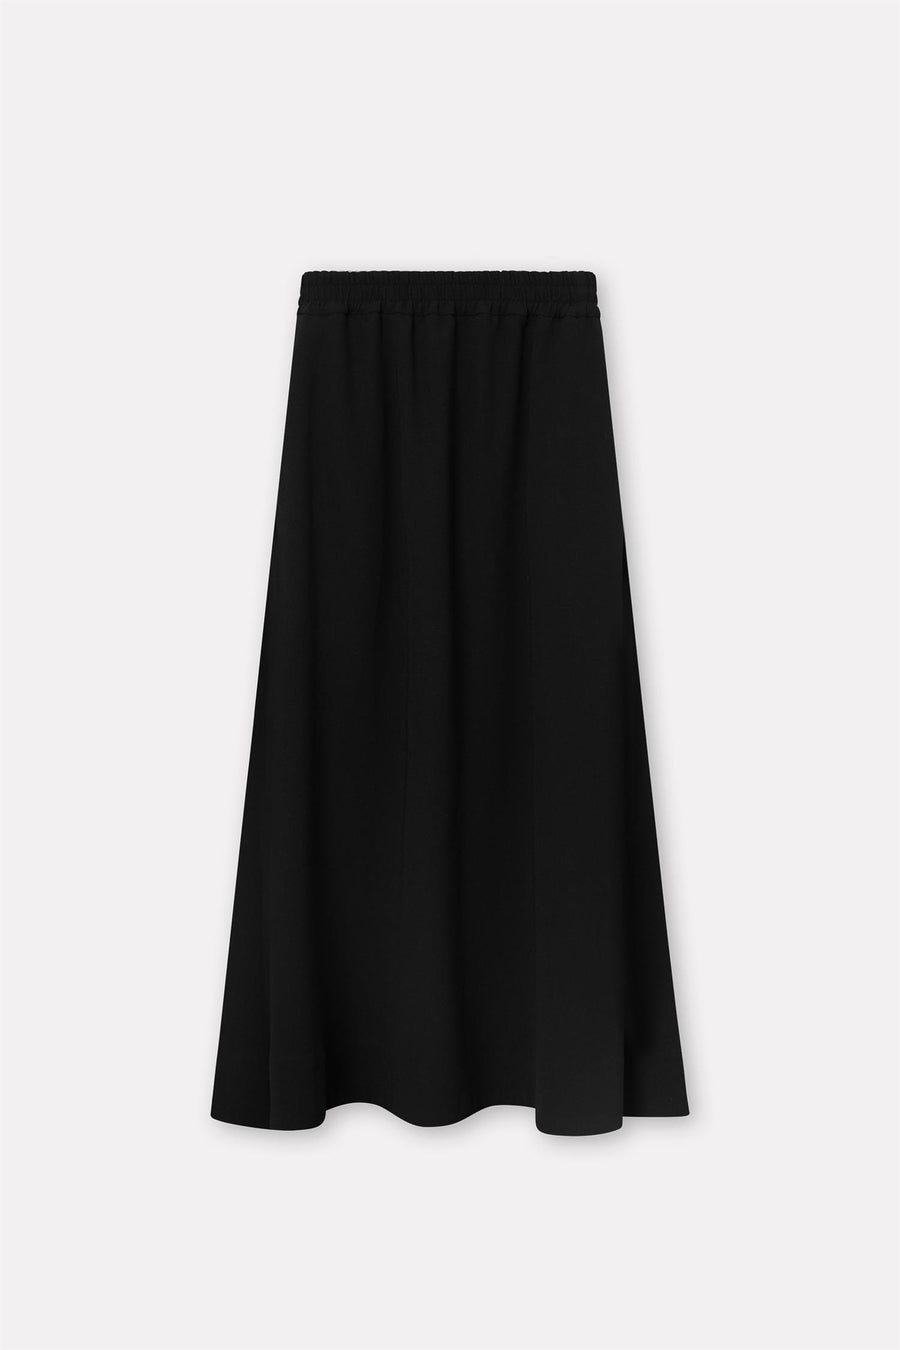 Nasha Skirt